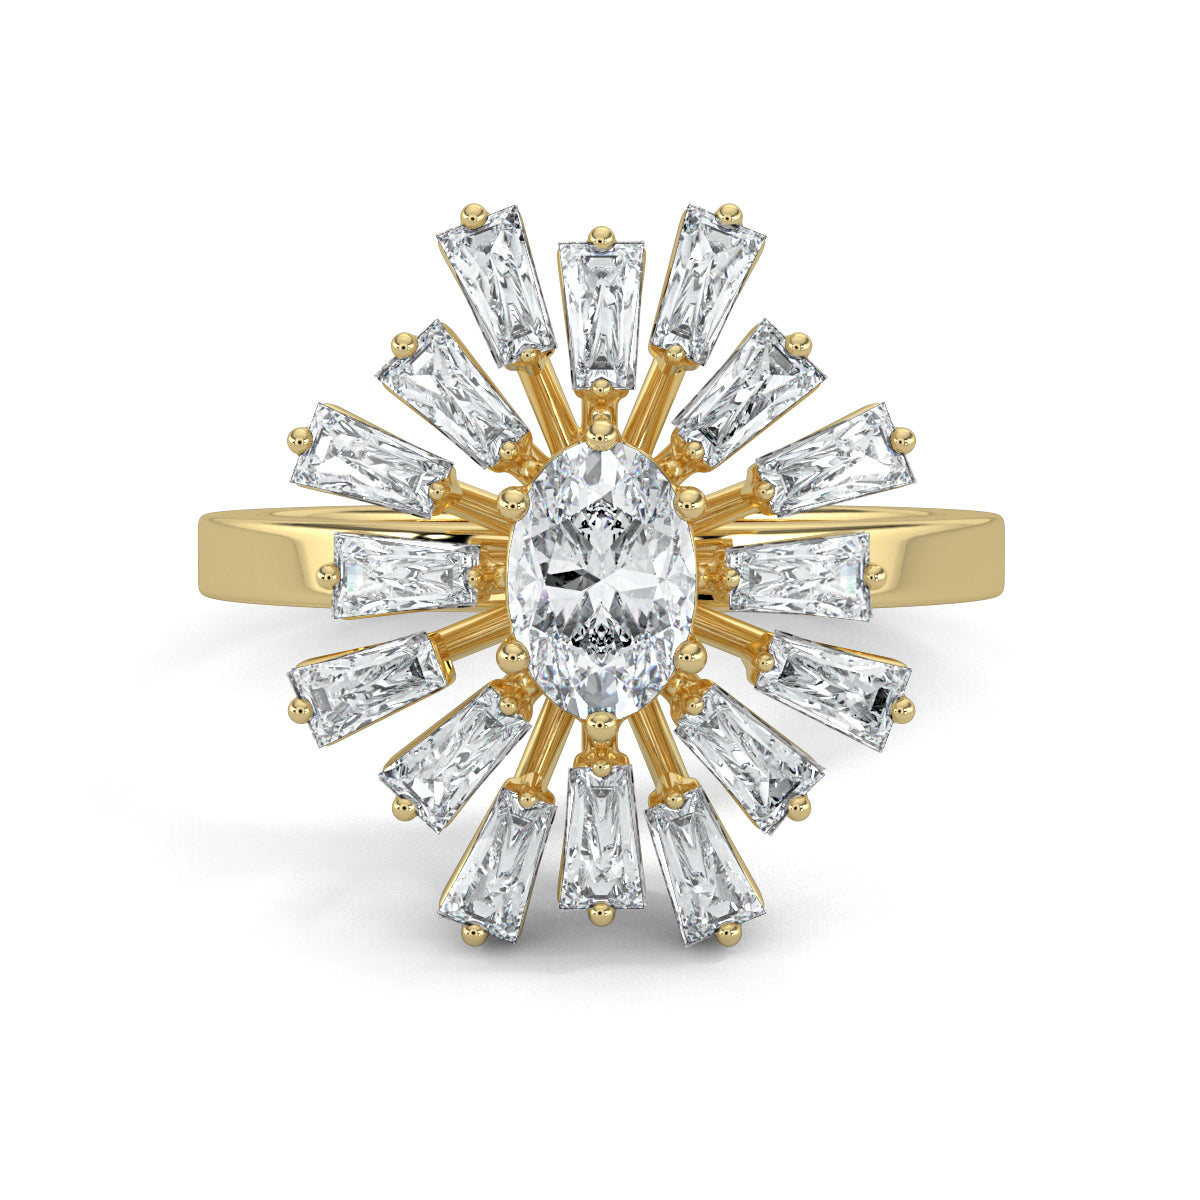 Yellow Gold, Diamond Ring, Luminary Luster Diamond Ring, Natural Diamond Ring, Lab-Grown Diamond Ring, Oval Diamond Ring, Baguette Diamond Ring, Everyday Wear Ring, Sustainable Diamond Ring